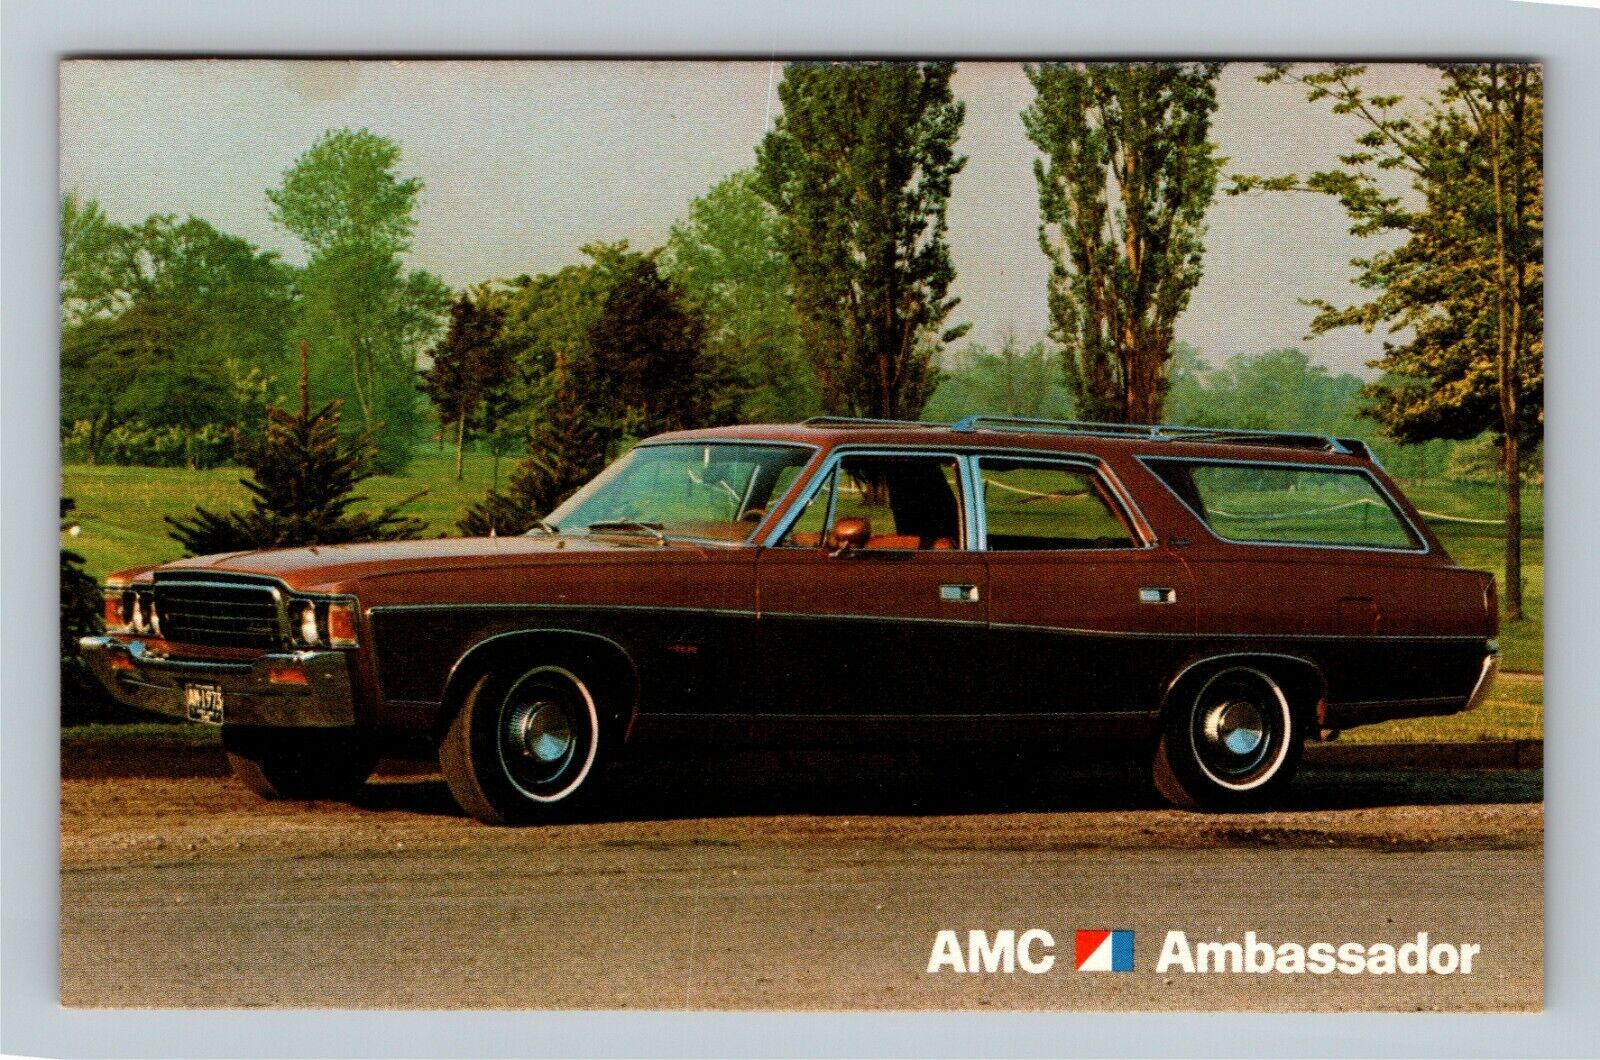 Automobile-1973 AMC Ambassador Station Wagon, Vintage Postcard